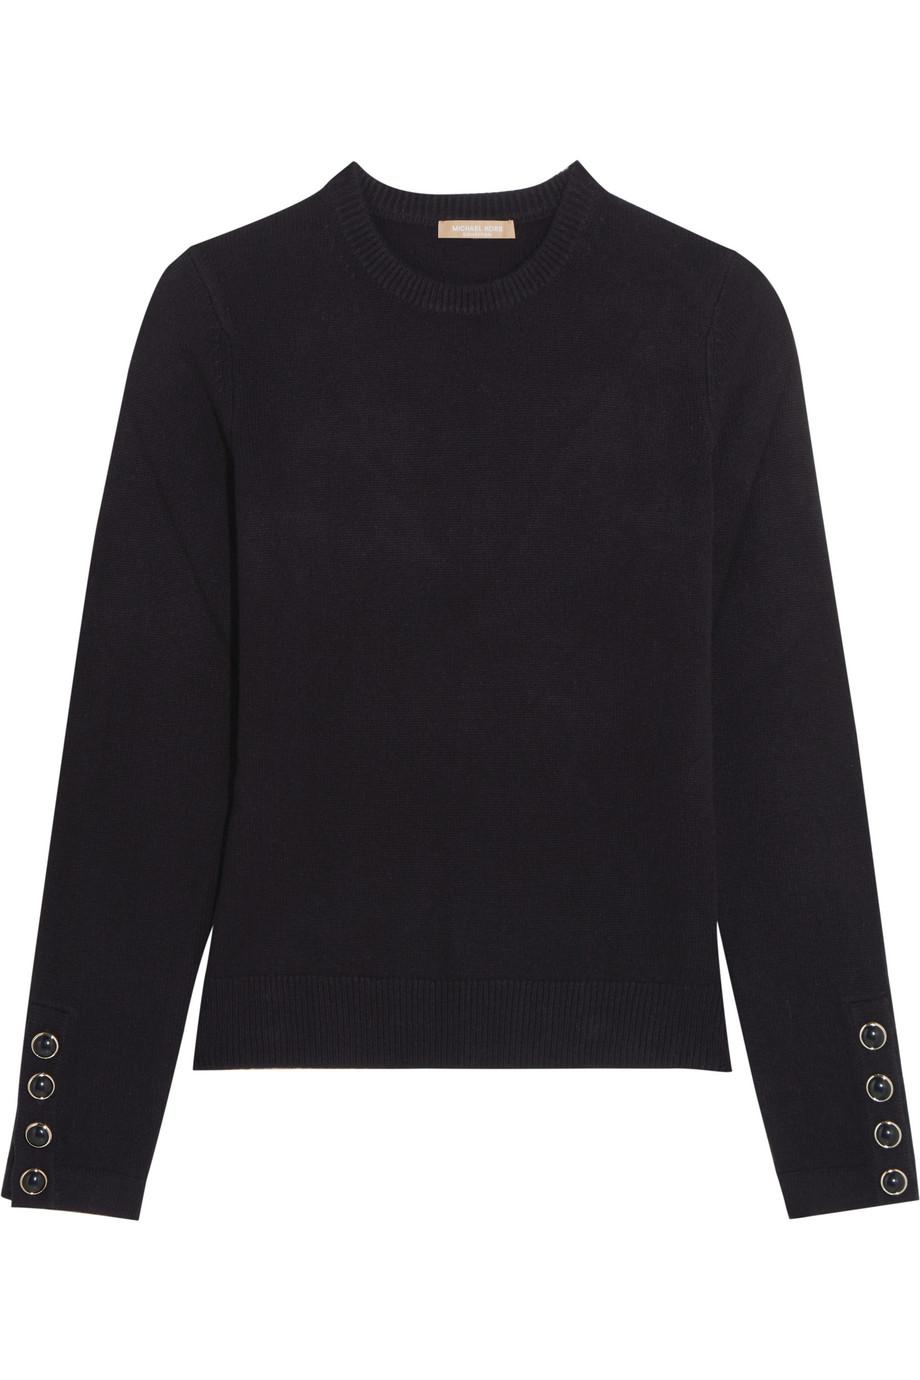 Michael Kors Cashmere Sweater | ModeSens